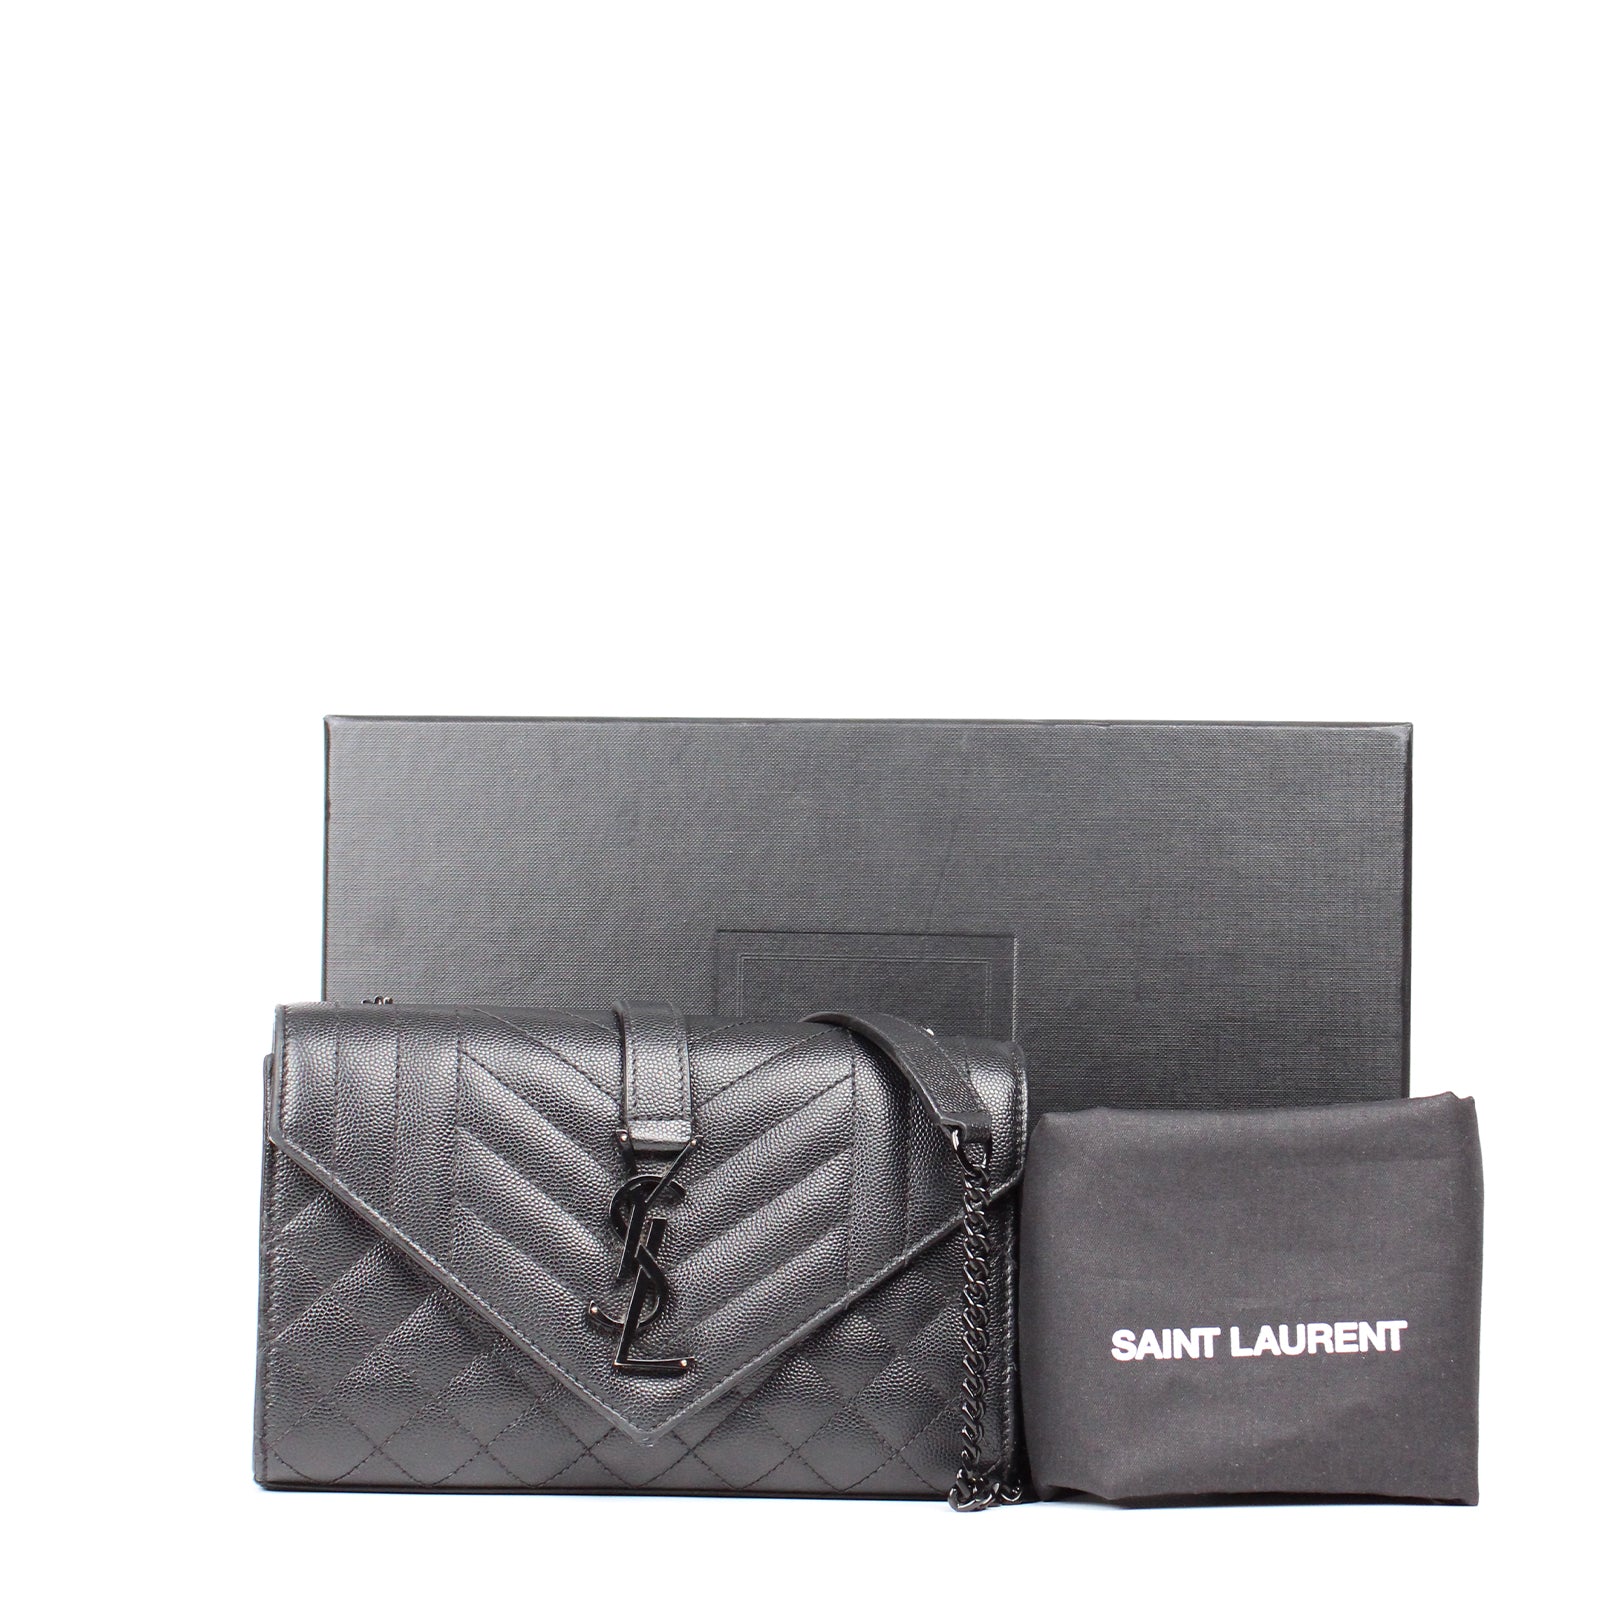 SAINT LAURENT - Sac Envelope Small full black